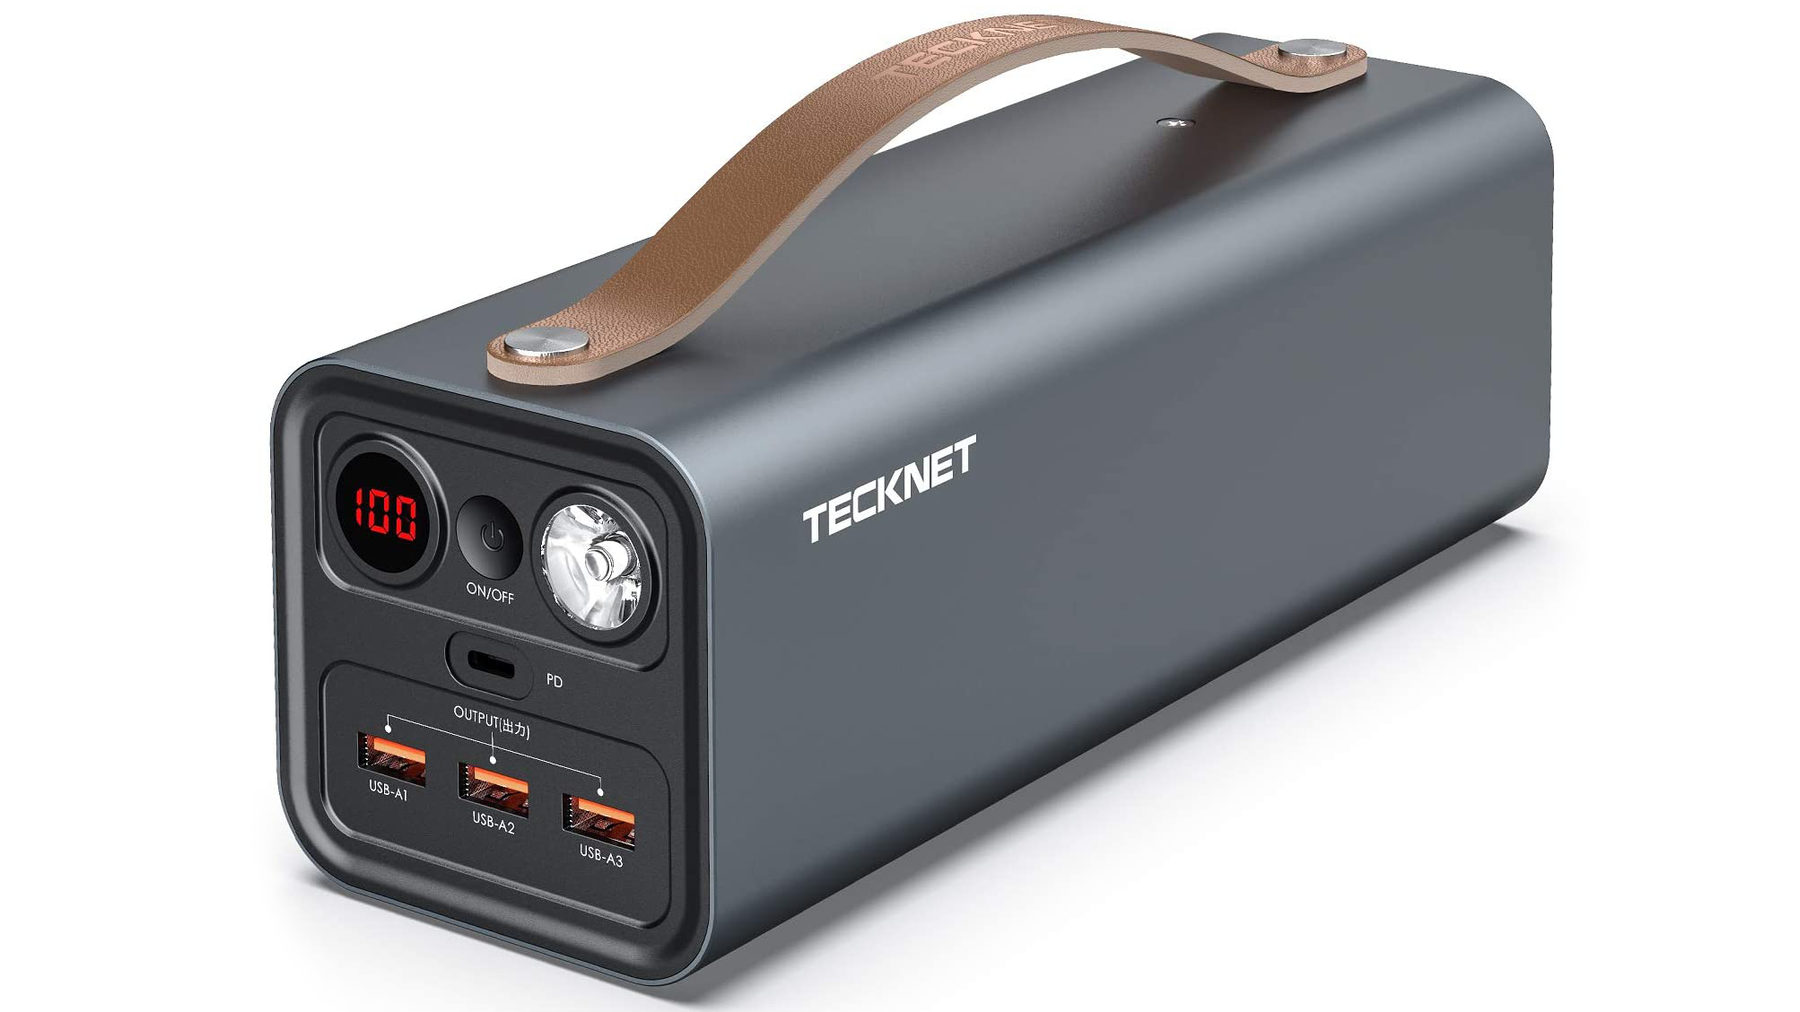 Tecknet Portable Laptop Charger - USB-C battery